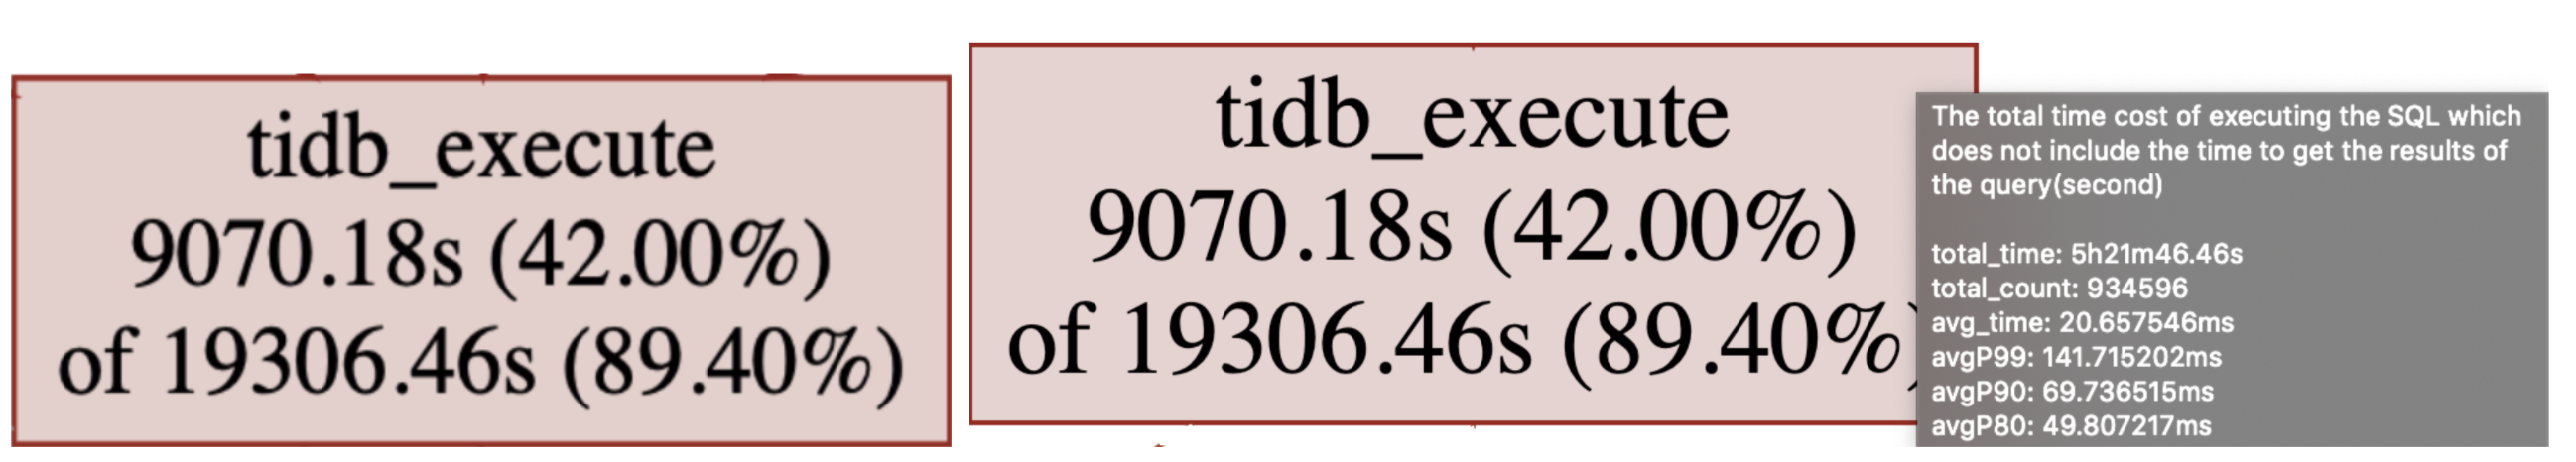 tidb_execute node example